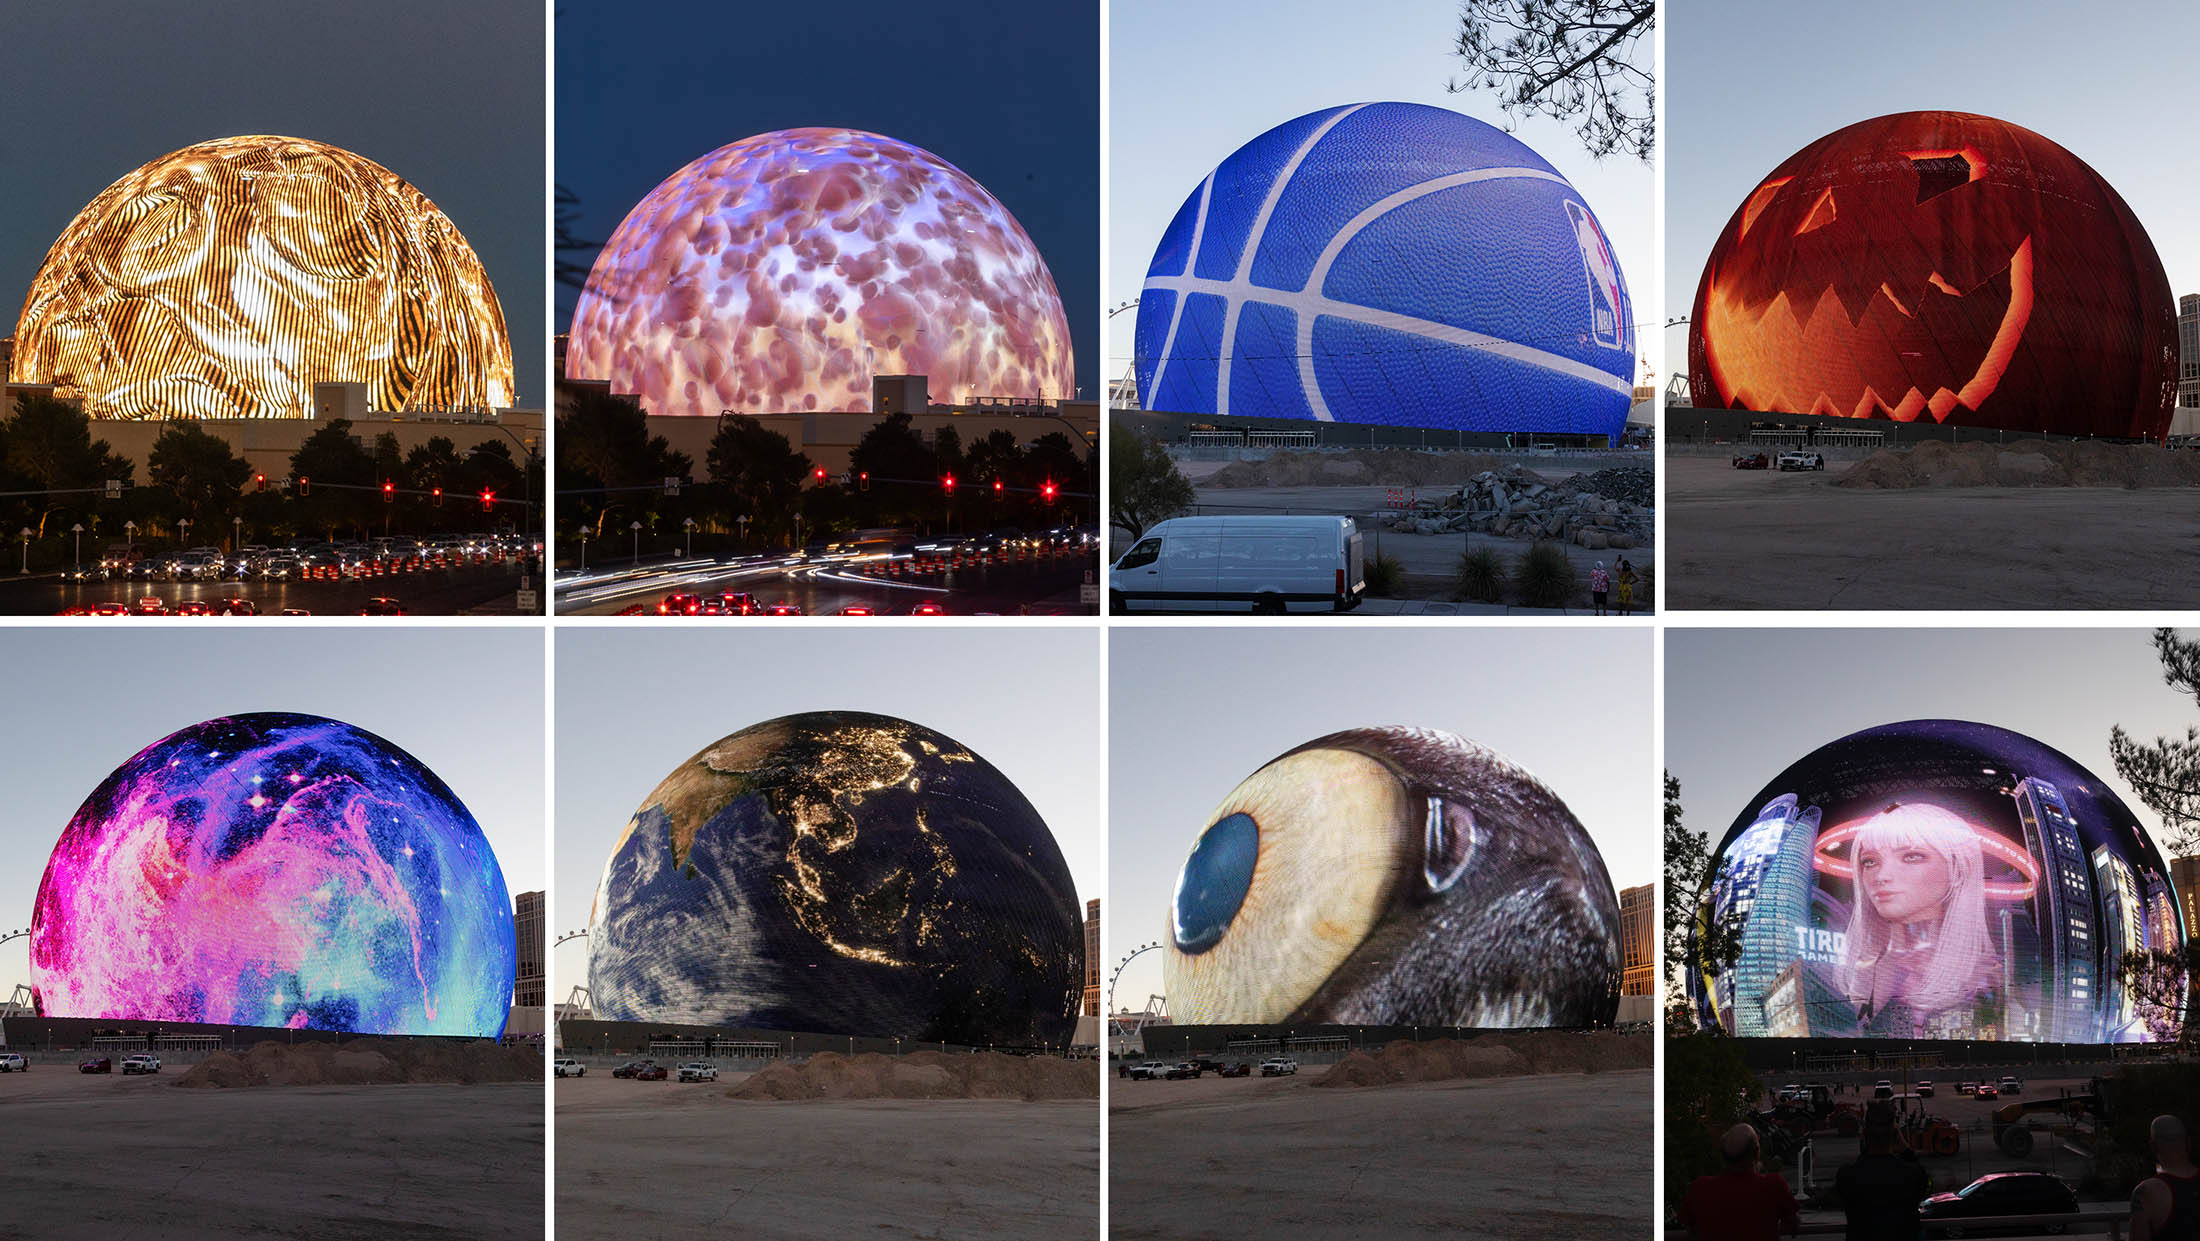 Backyard LED Sculpture Inspired By Las Vegas Sphere